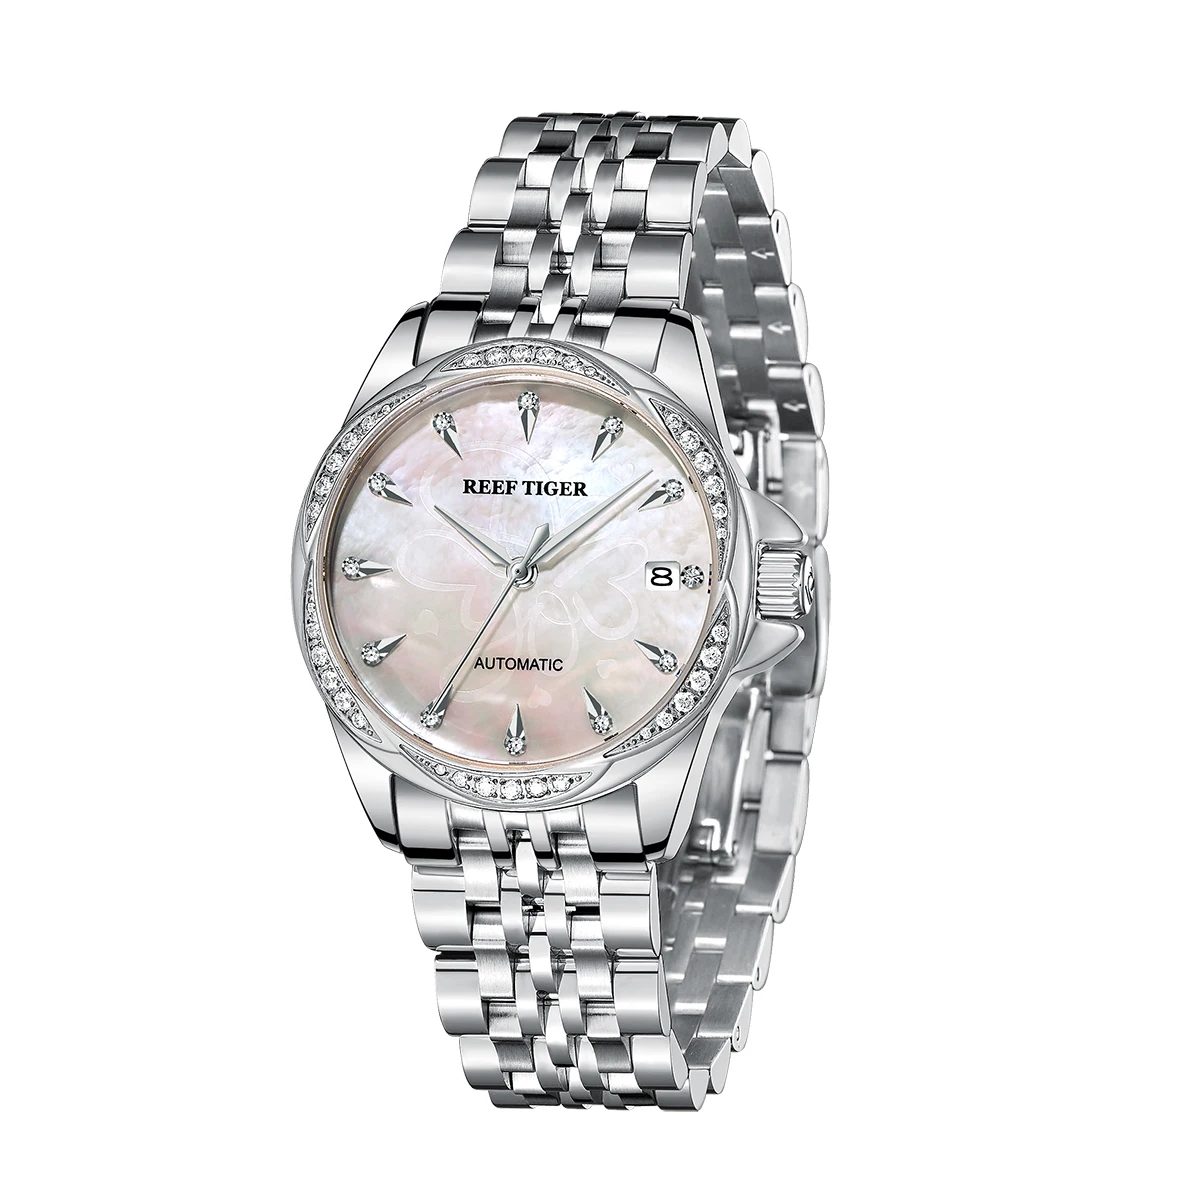 Reef Tiger/RT Sapphire Crystal Women Mechanical Watch Luxury Brand Women Automatic Watch Diamond Dress Watch RGA1583-2 enlarge